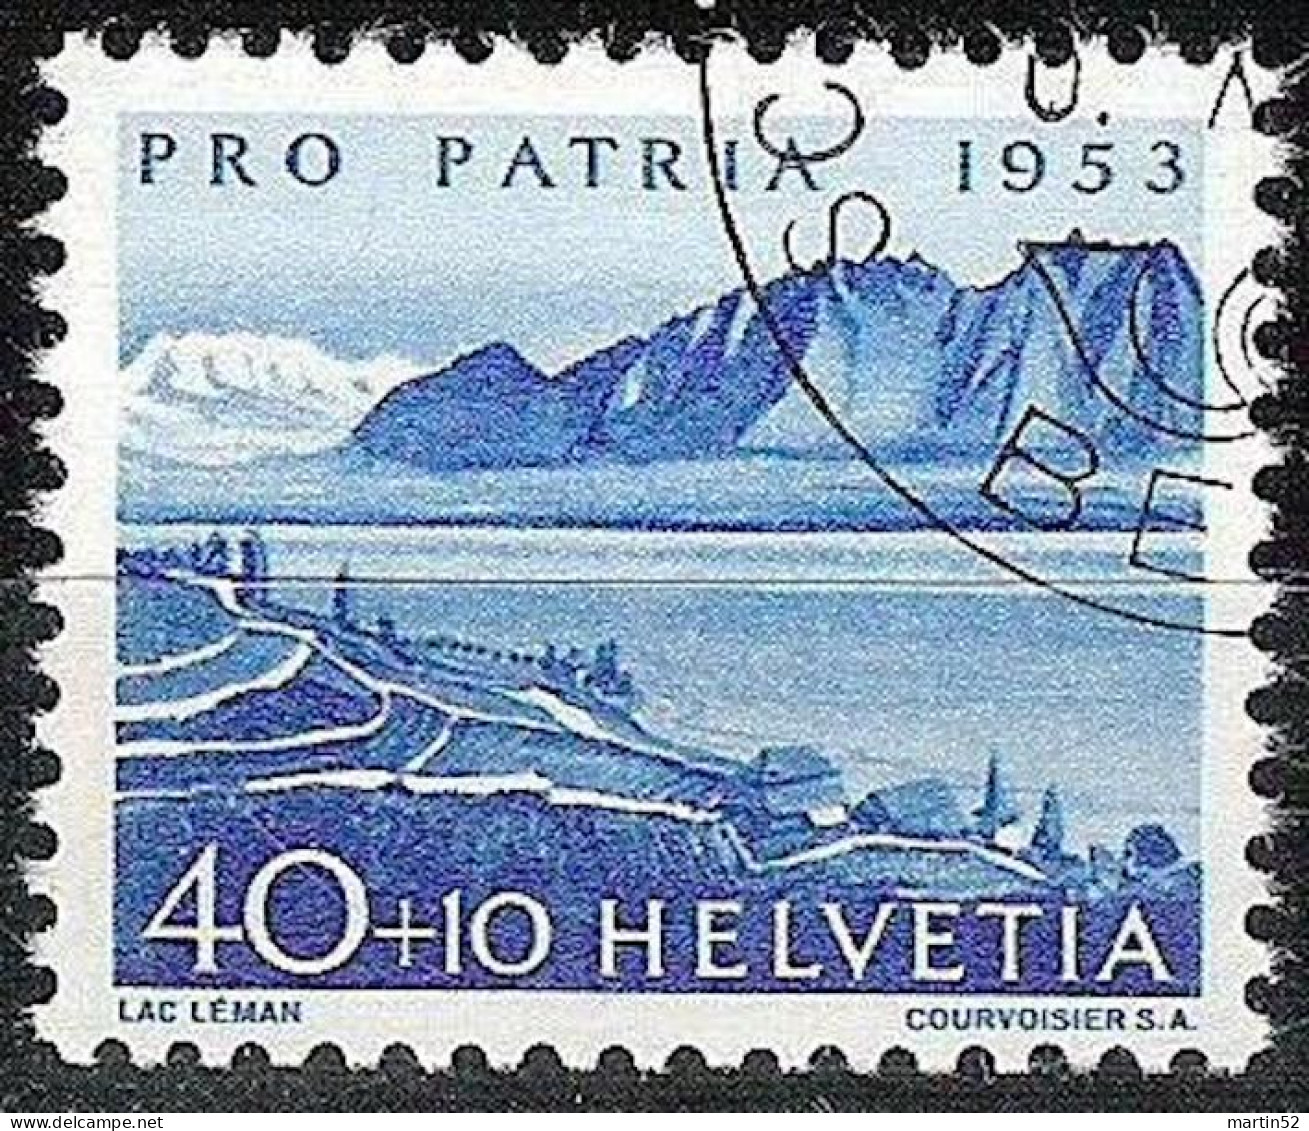 Schweiz Suisse Pro Patria 1953: "Lac Léman" Zu WII 65 Mi 584 Yv 535 Mit Stempel POSTMUSEUM 8.X.53 BERN (Zu CHF 15.00) - Used Stamps